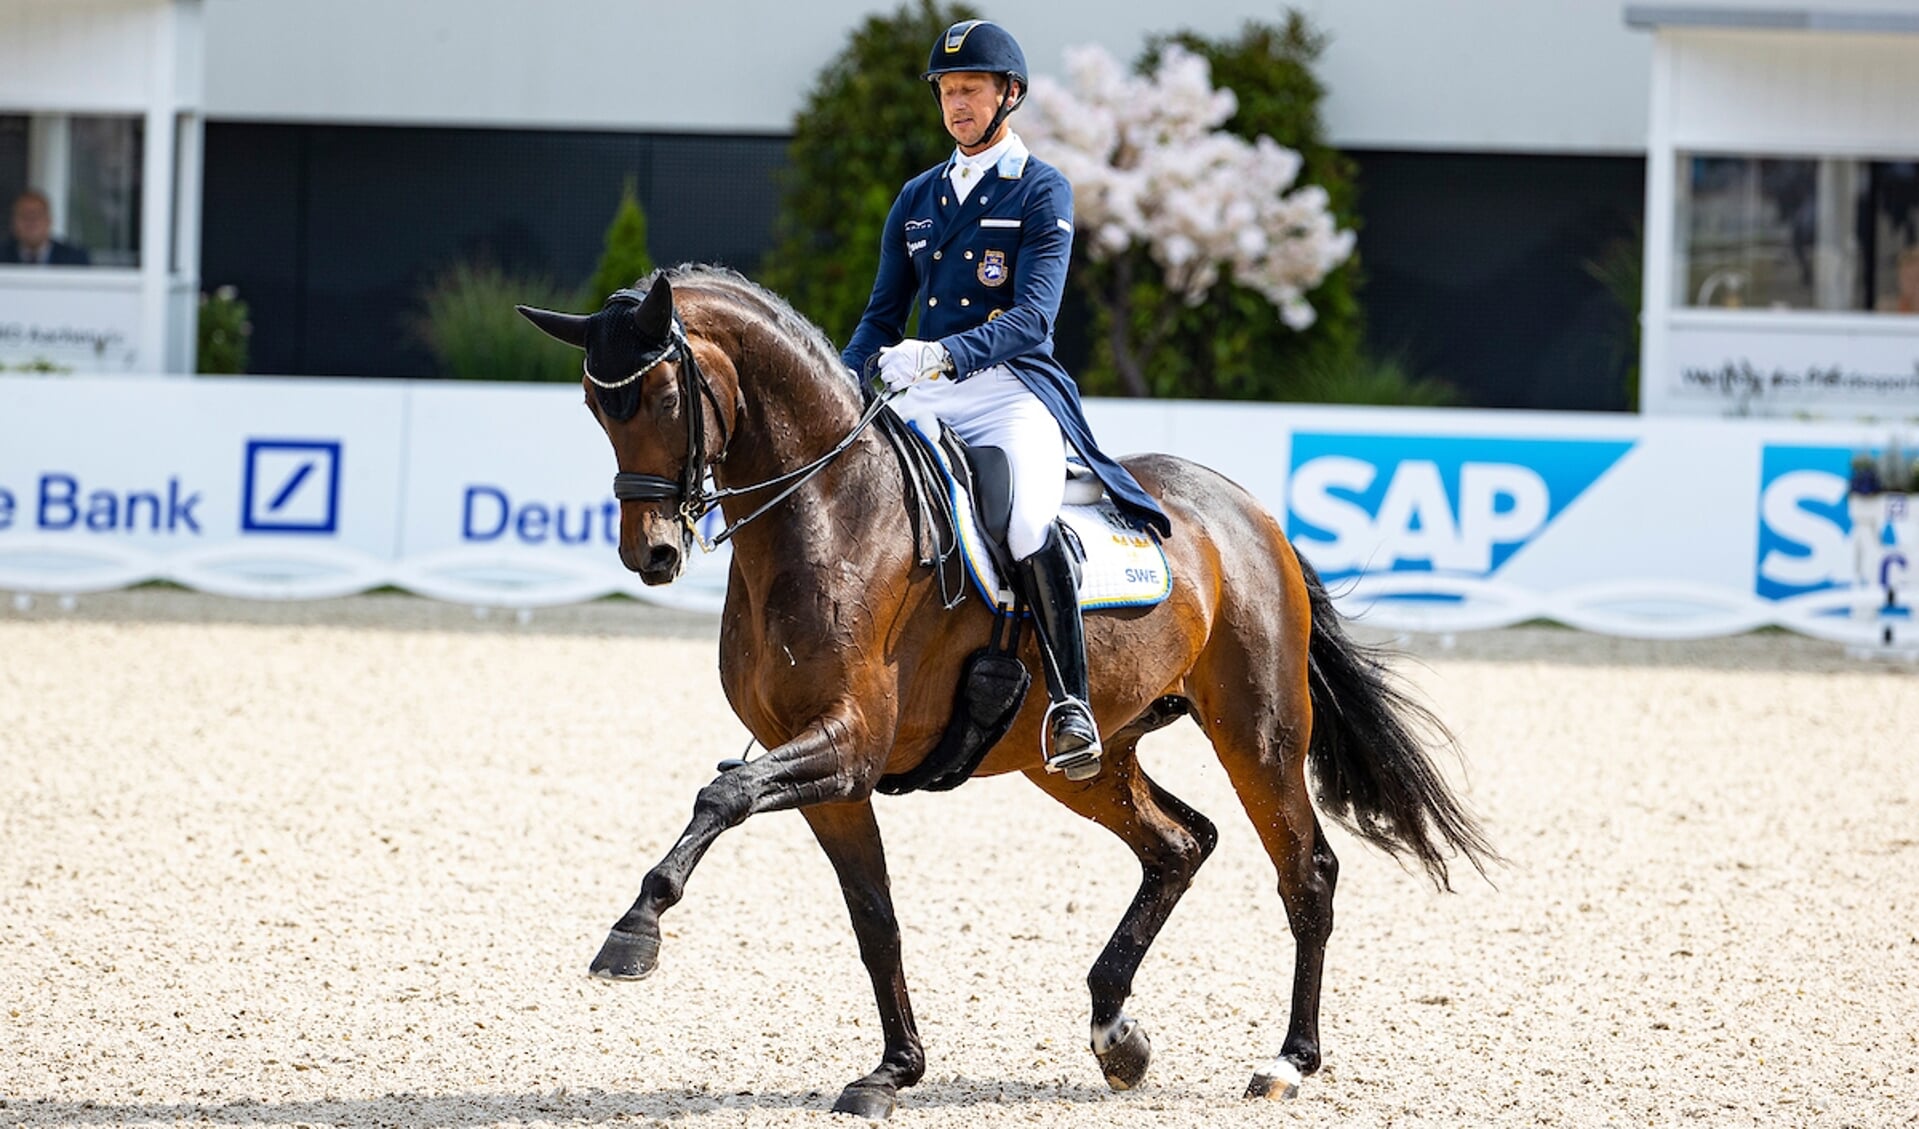 Patrik Kittel - Fiontini
World Equestrian Festival CHIO Aachen 2021
© DigiShots